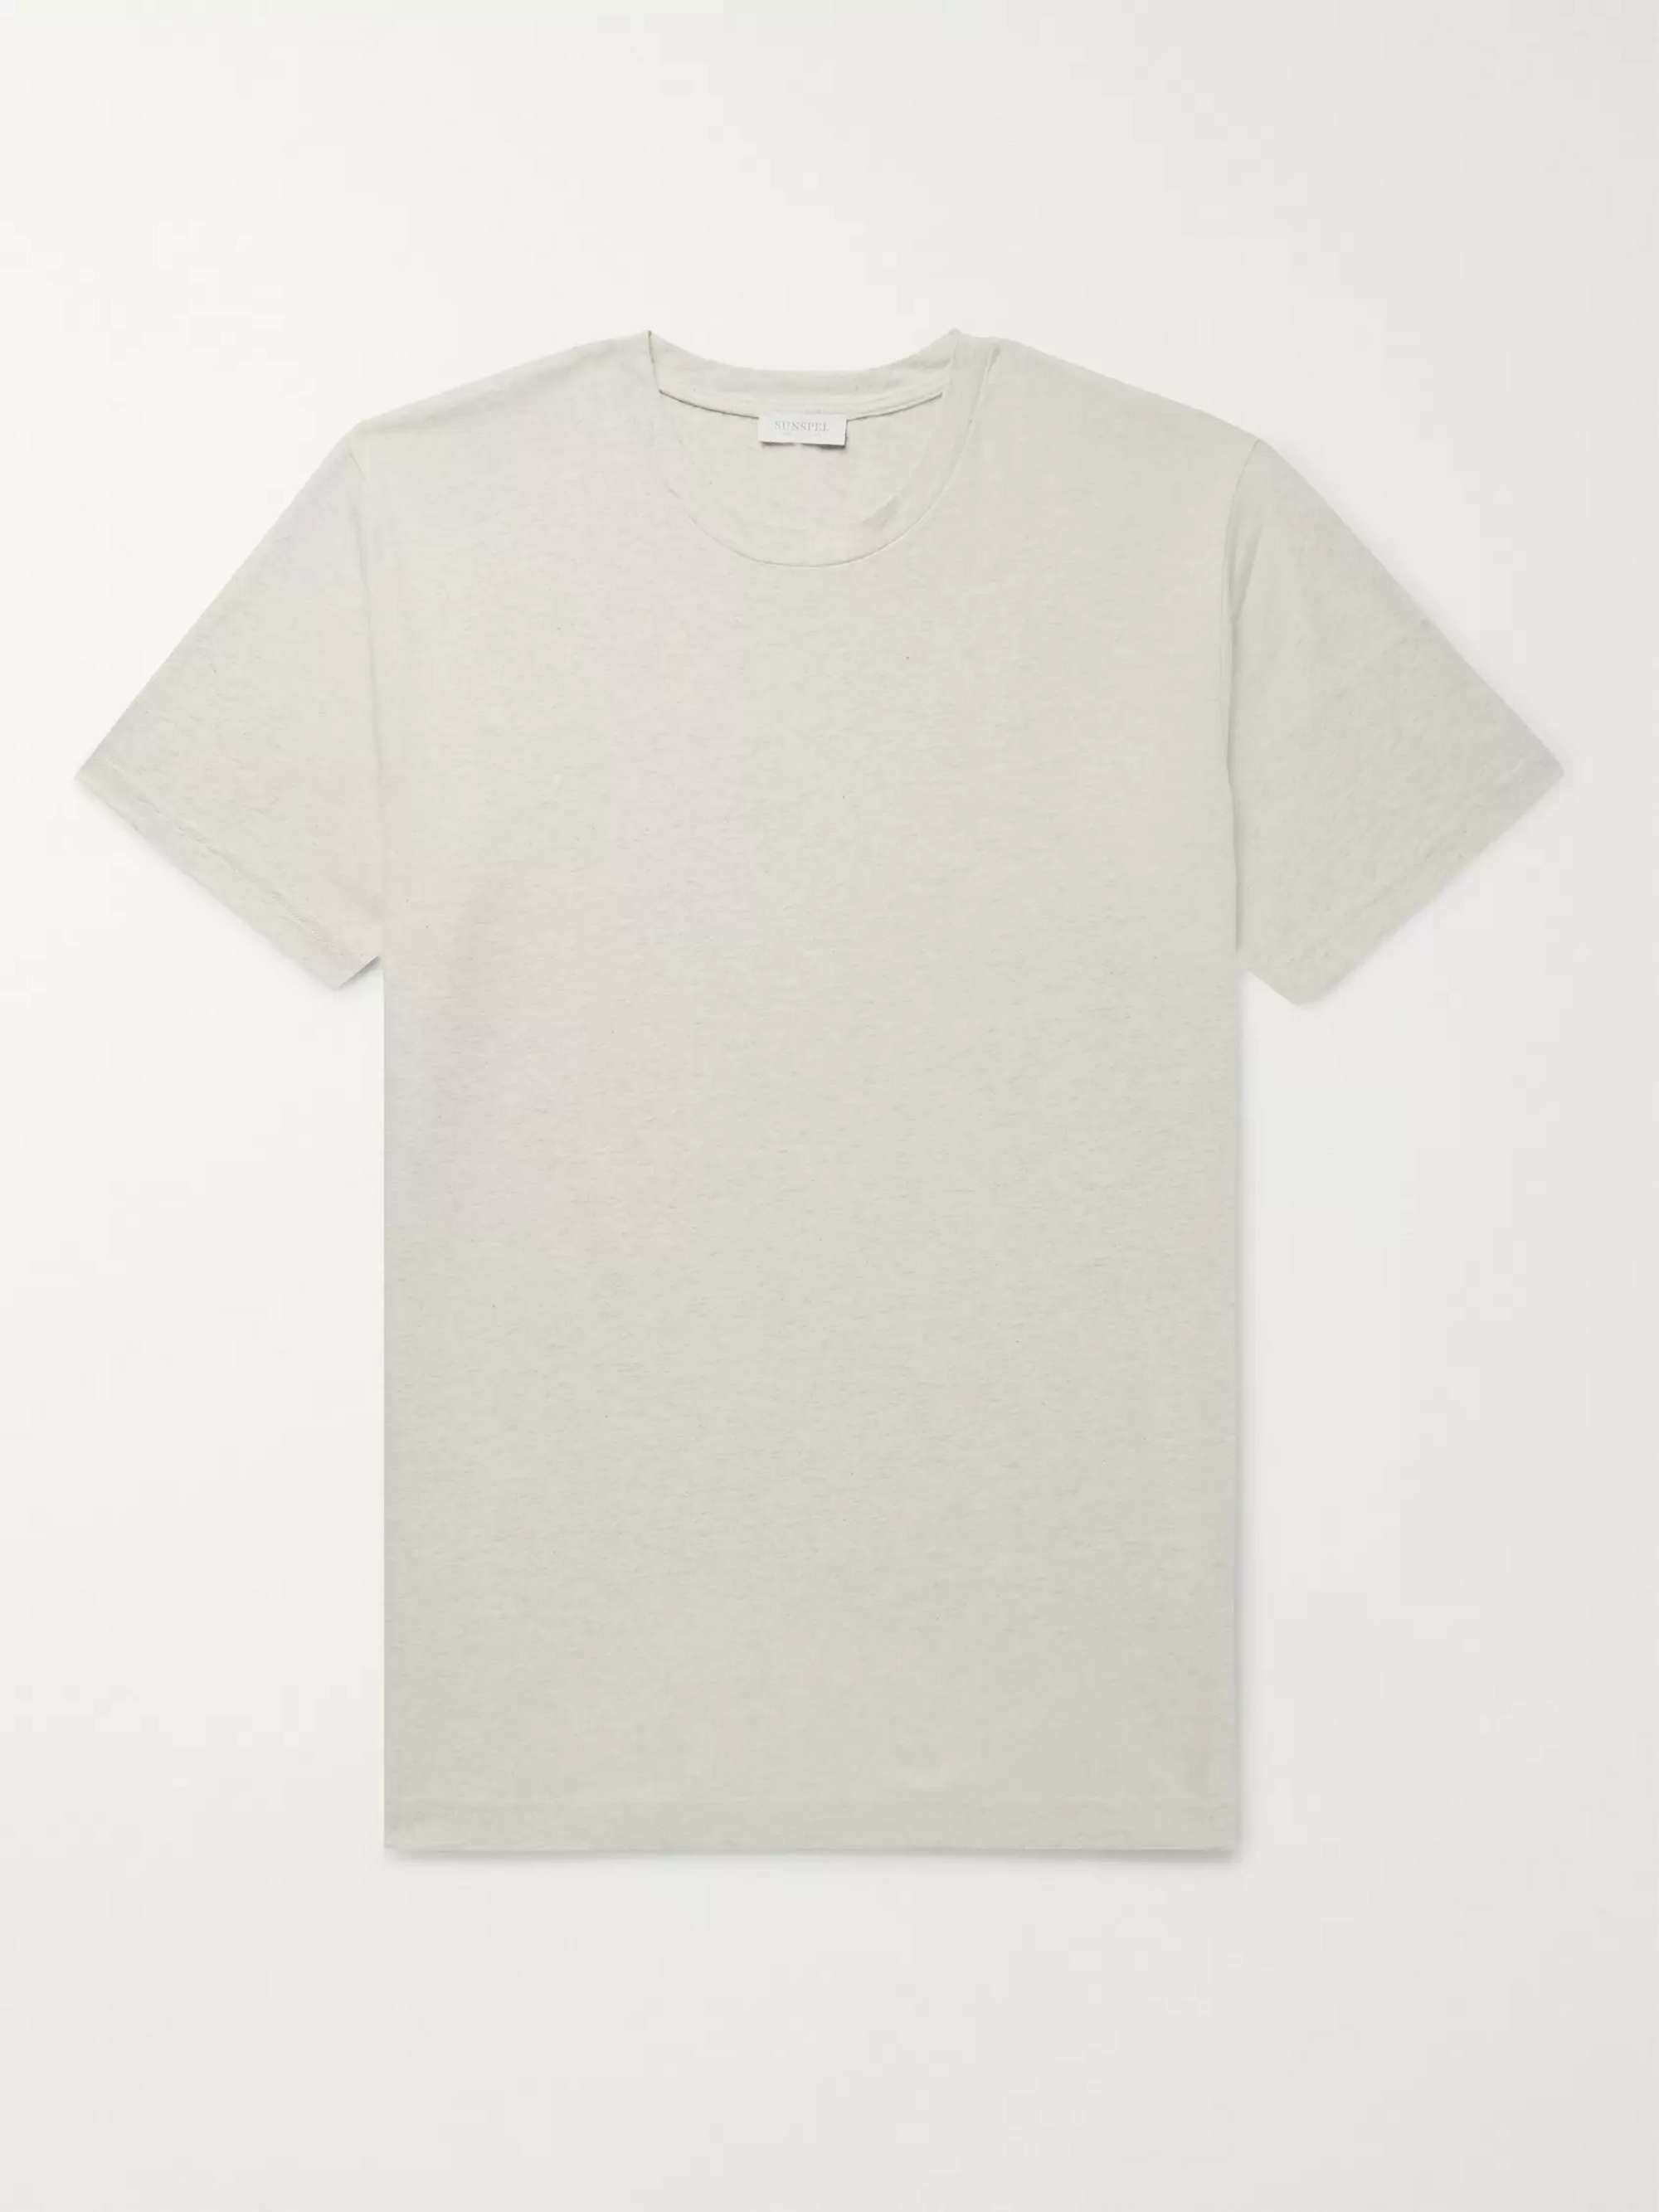 SUNSPEL Riviera Organic Cotton-Jersey T-Shirt